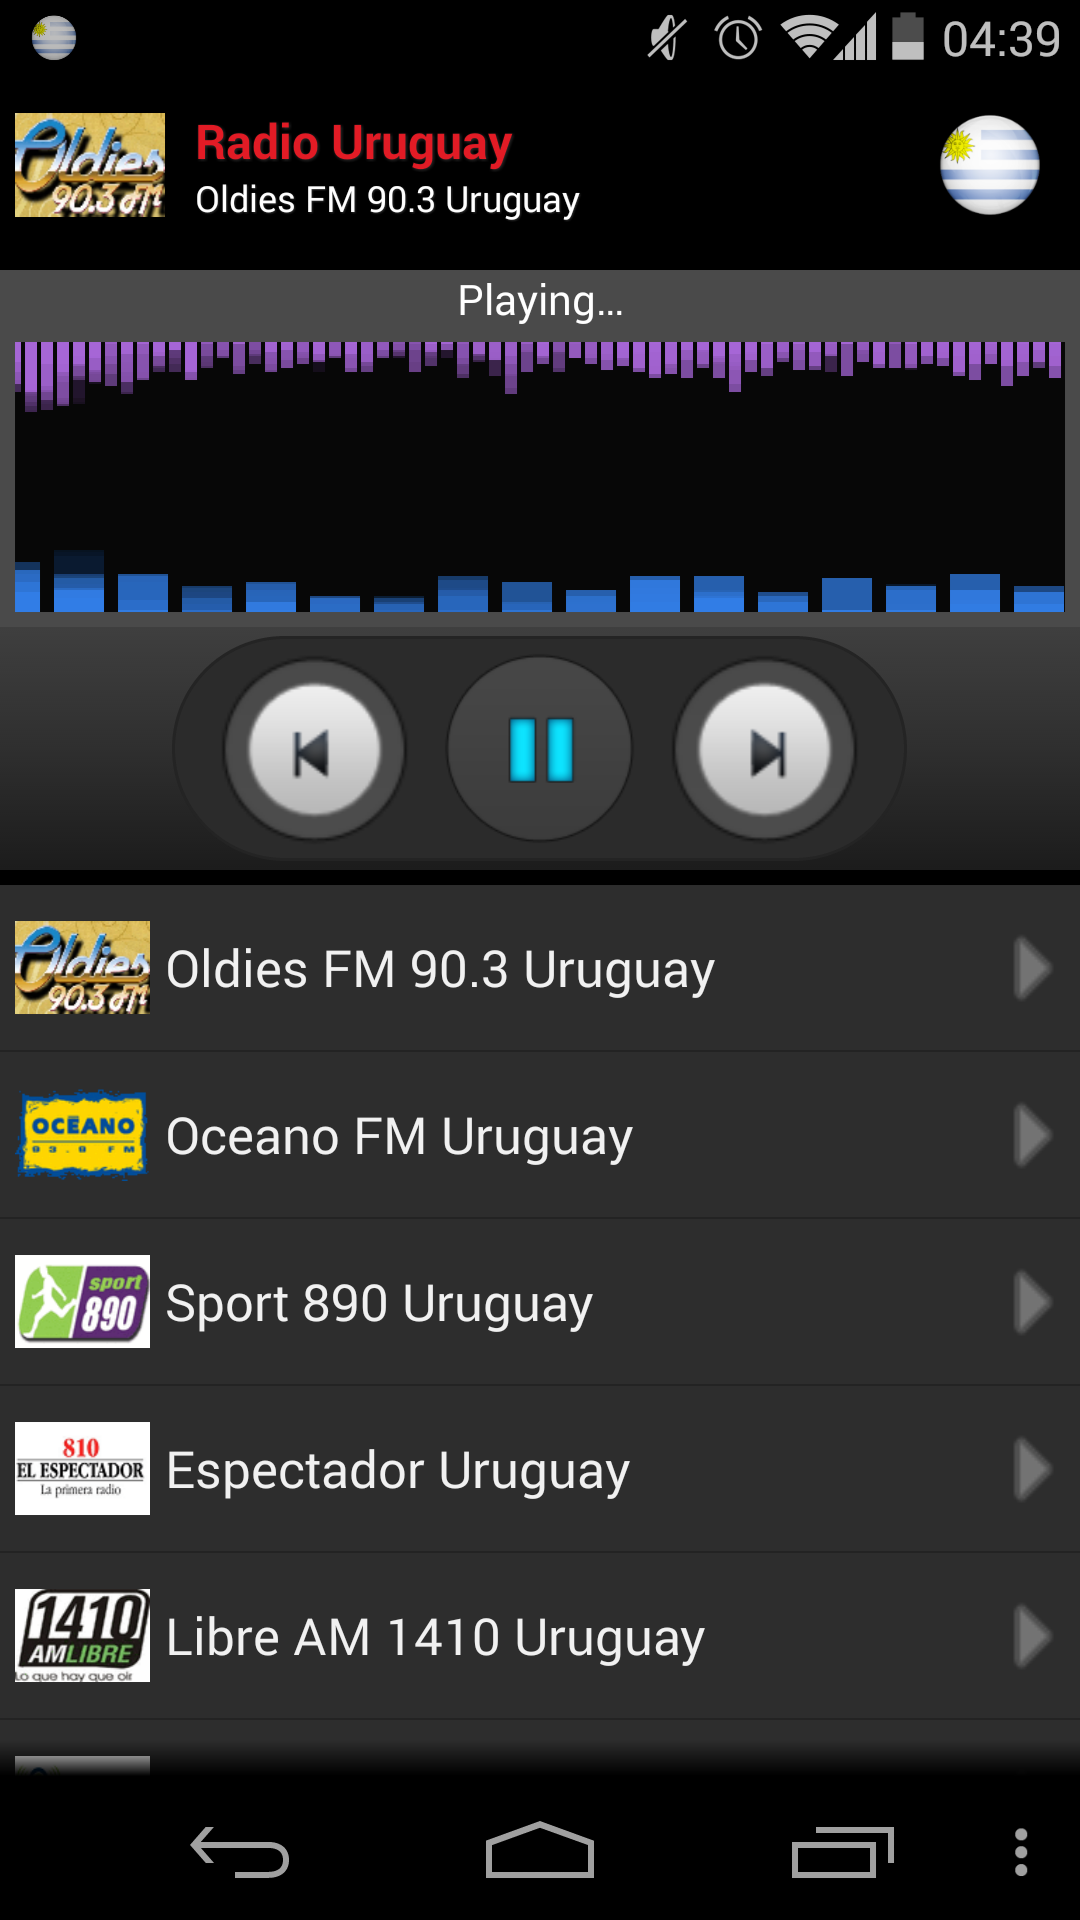 RADIO URUGUAY APK 2.3.0 for Android – Download RADIO URUGUAY APK Latest  Version from APKFab.com